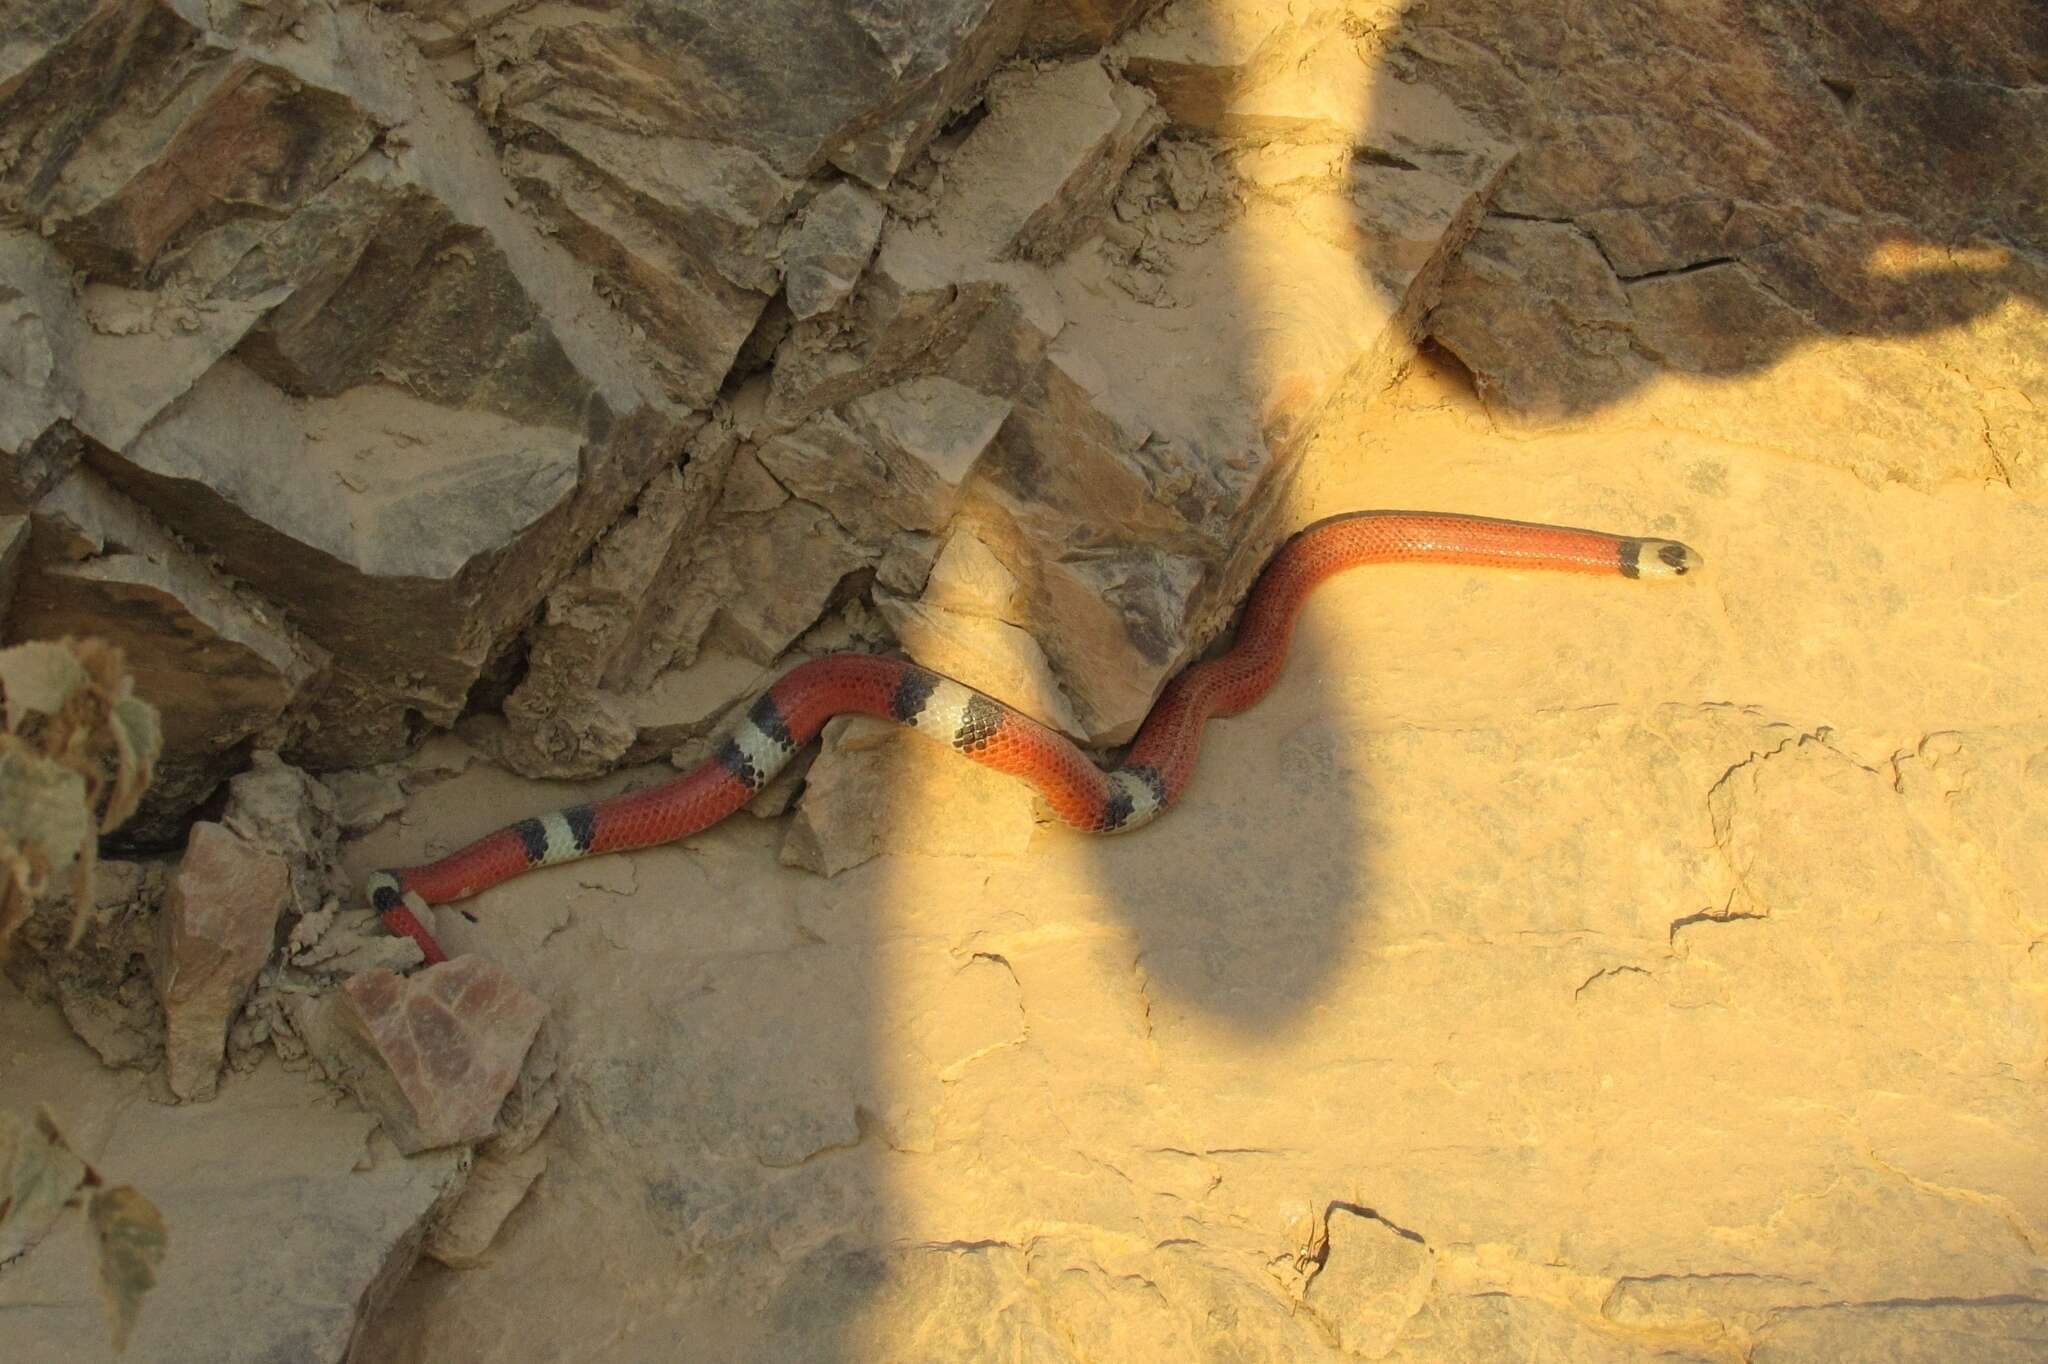 Image of Filetail Ground Snake